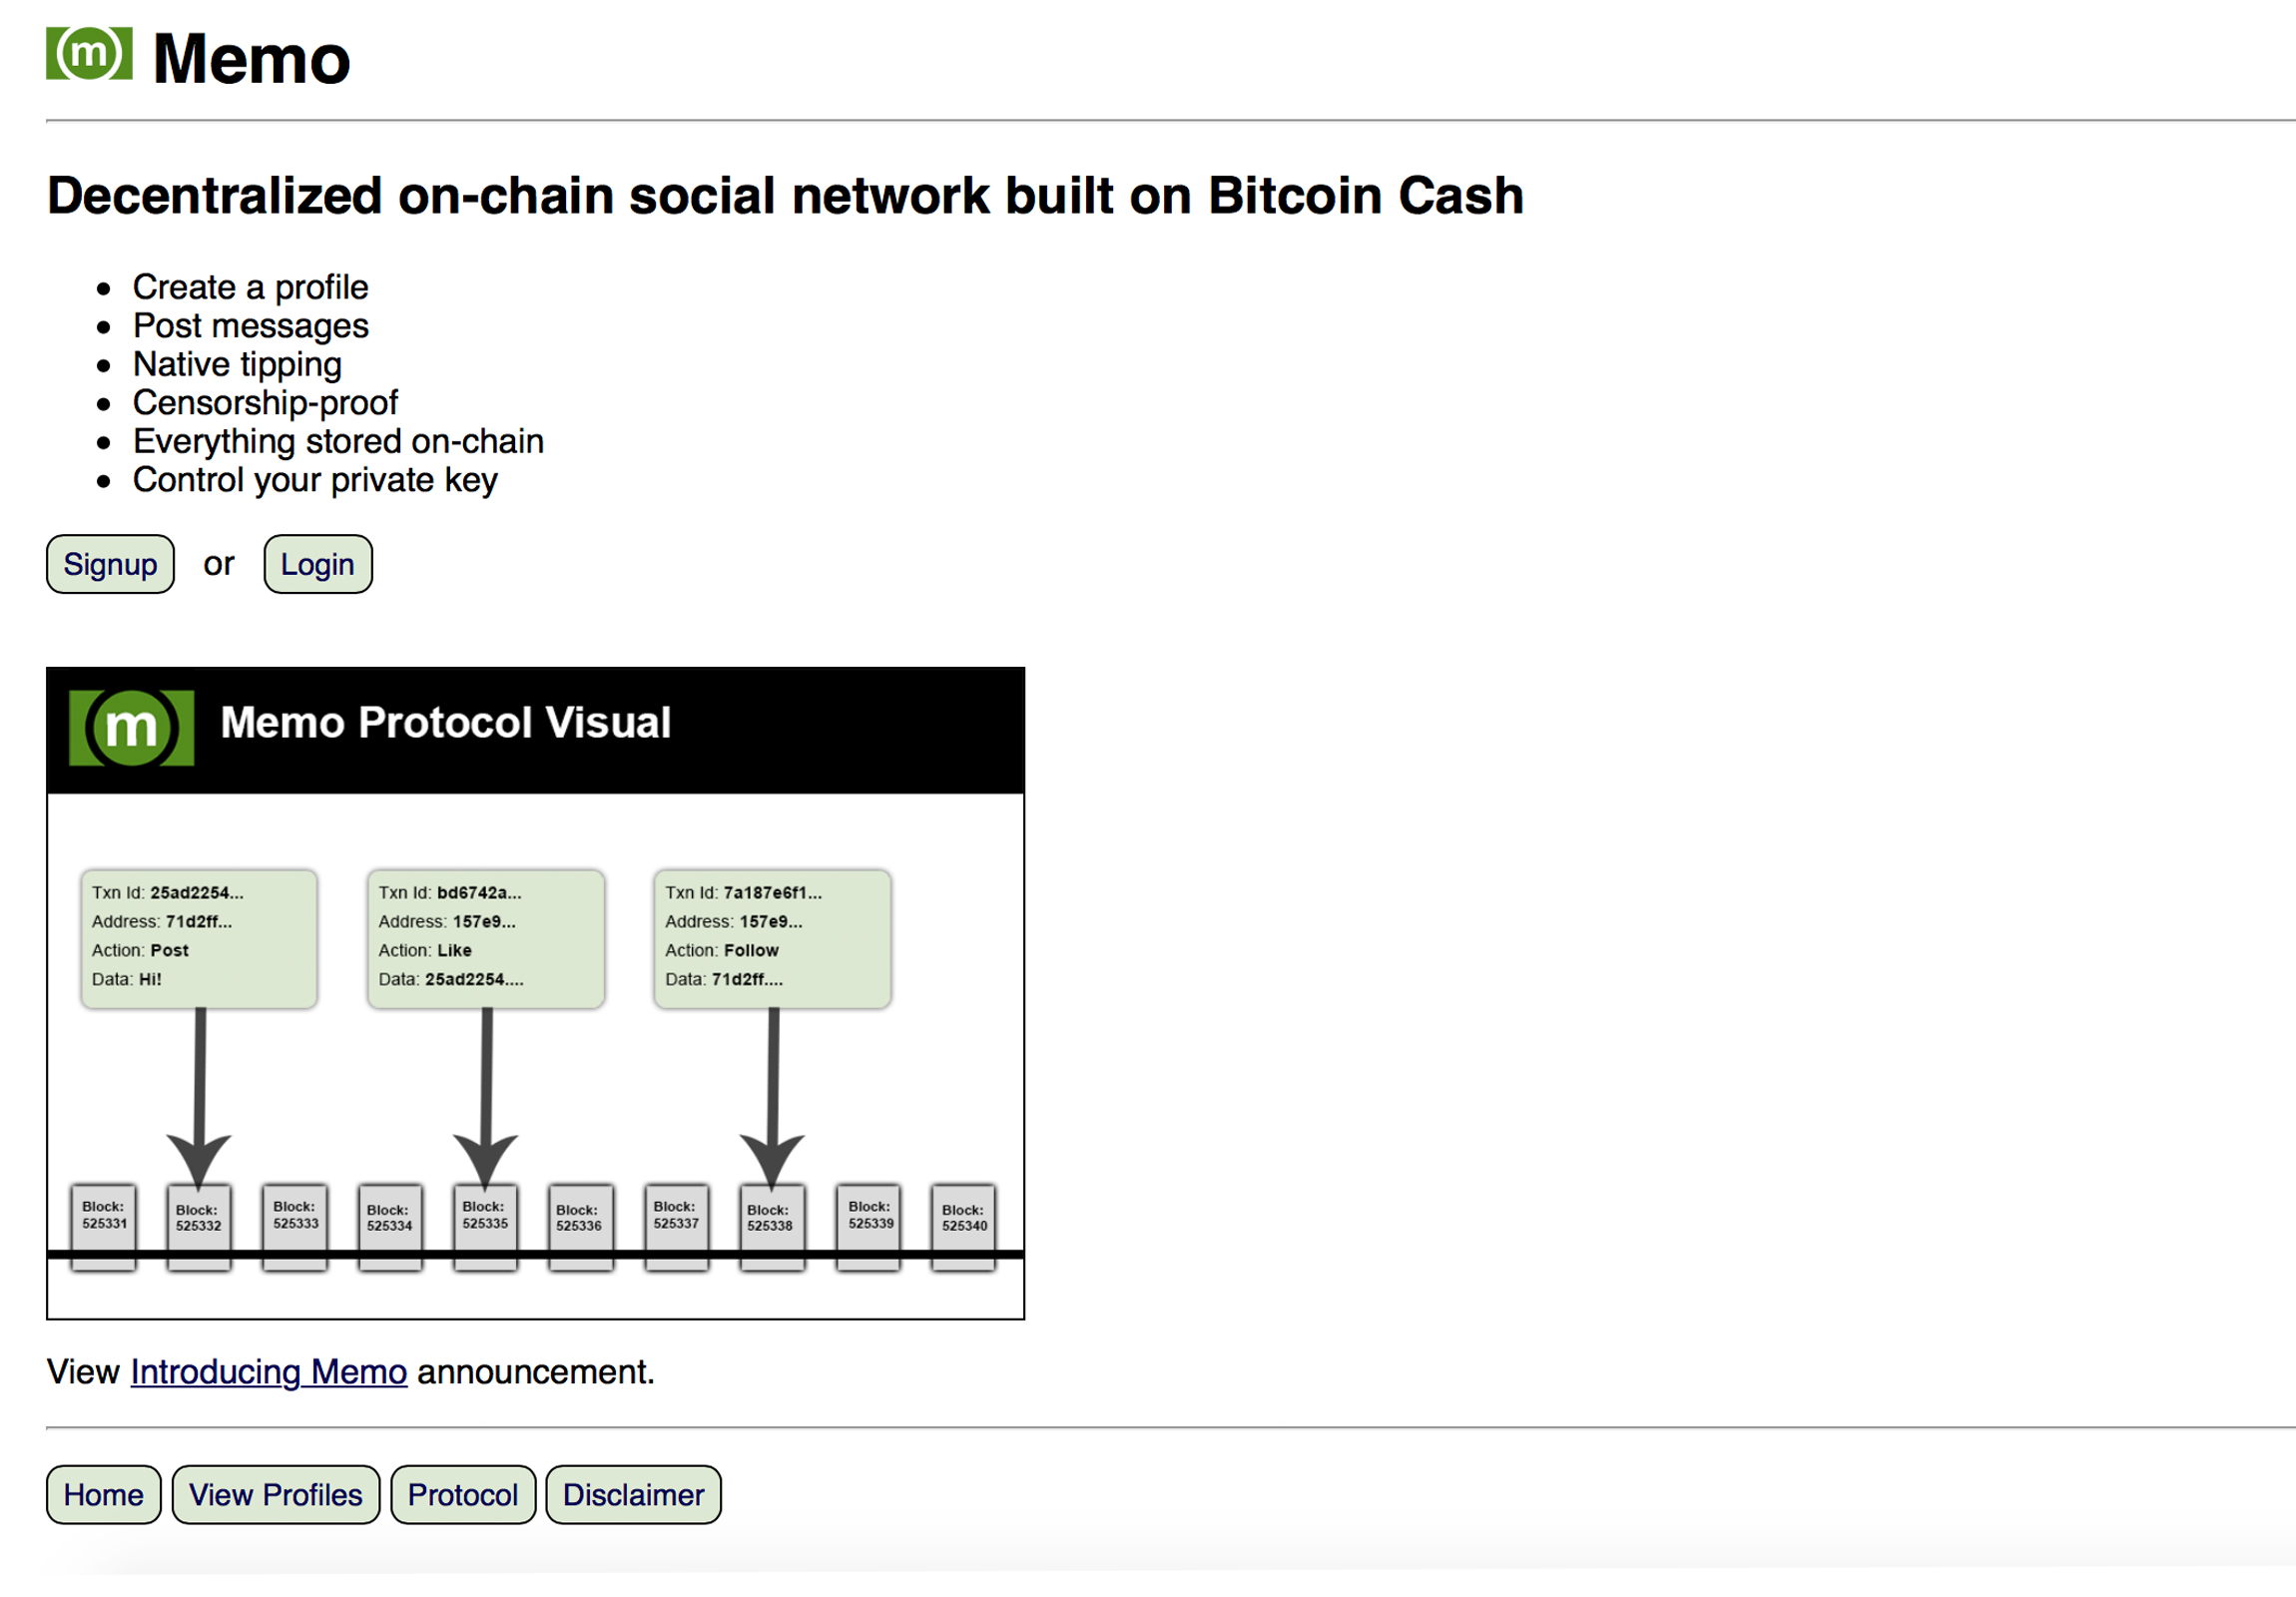 Meet Memo: An On-Chain Social Network Built on Bitcoin Cash